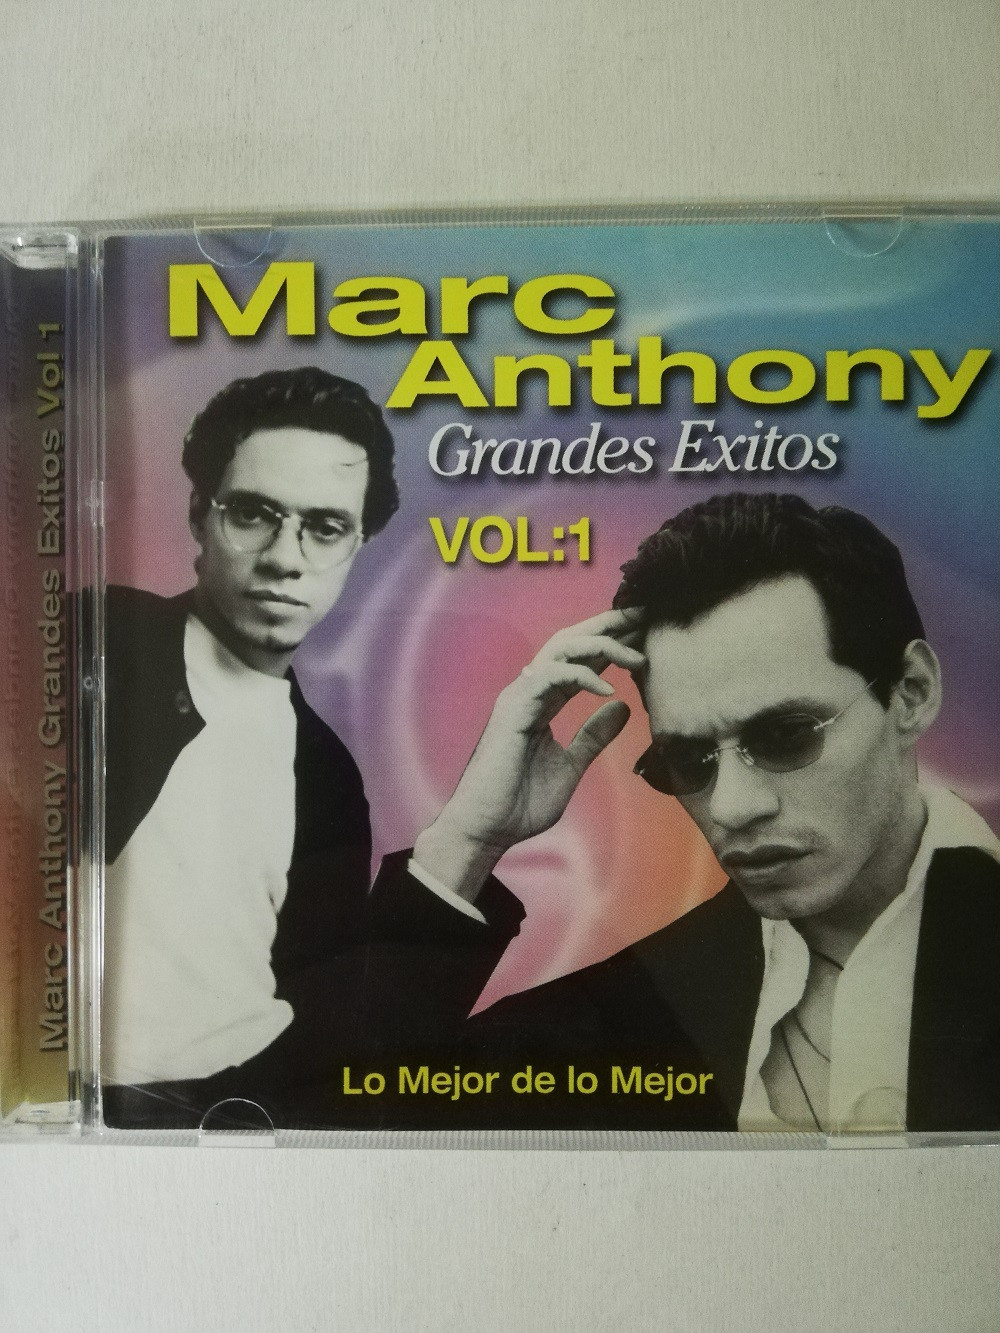 Imagen CD MARC ANTHONY - GRANDES EXITOS VOL. 1